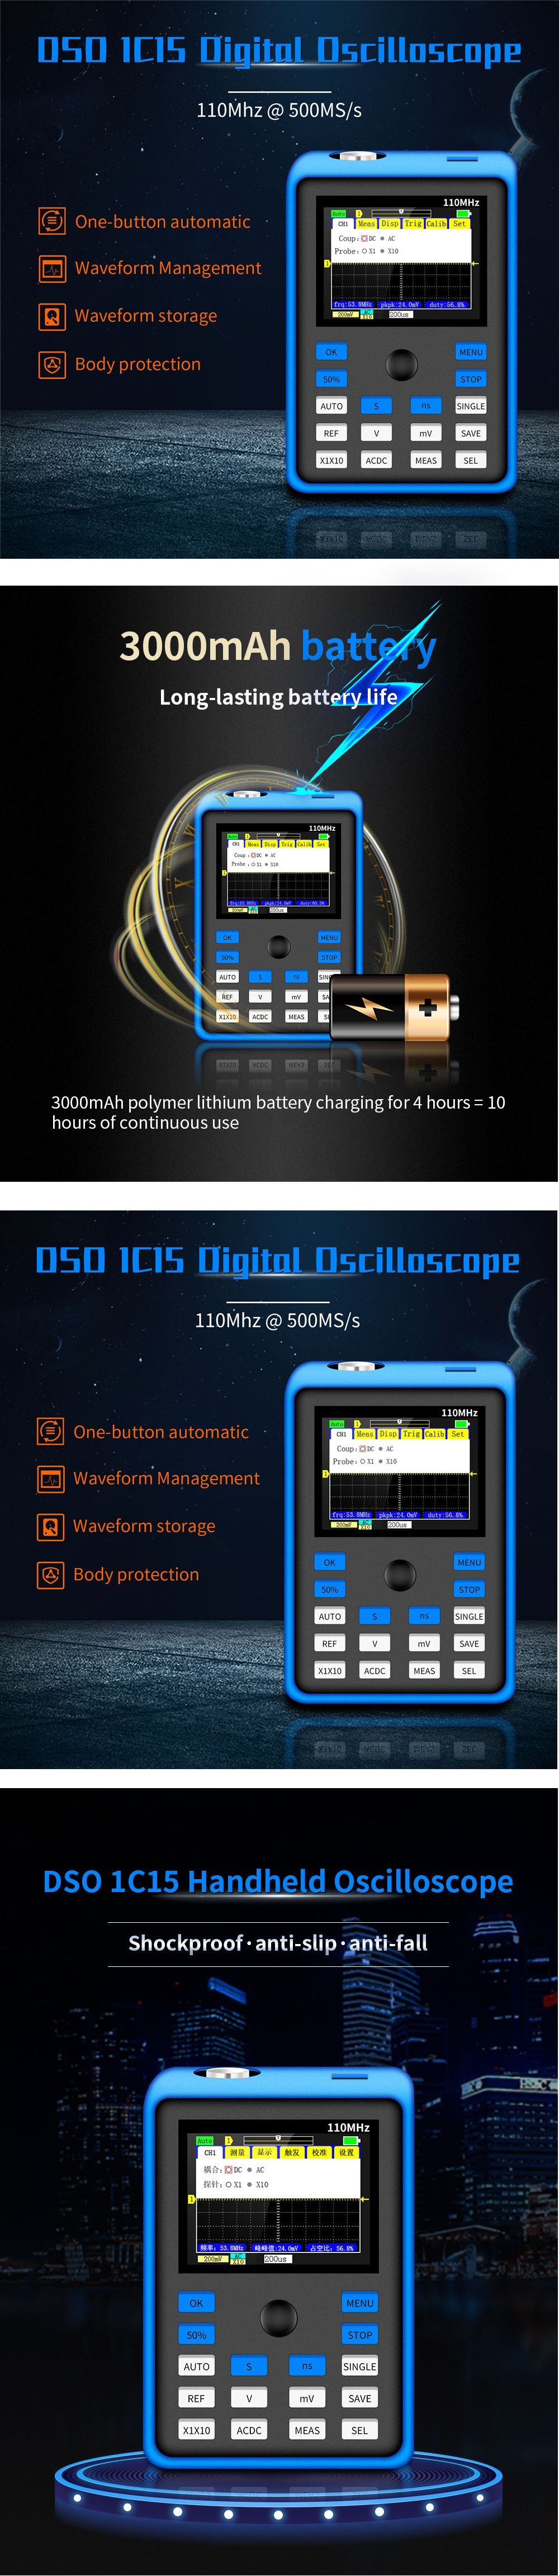 DSO1C15-Digital-Oscilloscope-500MSs-Sampling-Rate-110MHz-Analog-Bandwidth-Support-Waveform-Storage-W-1634767